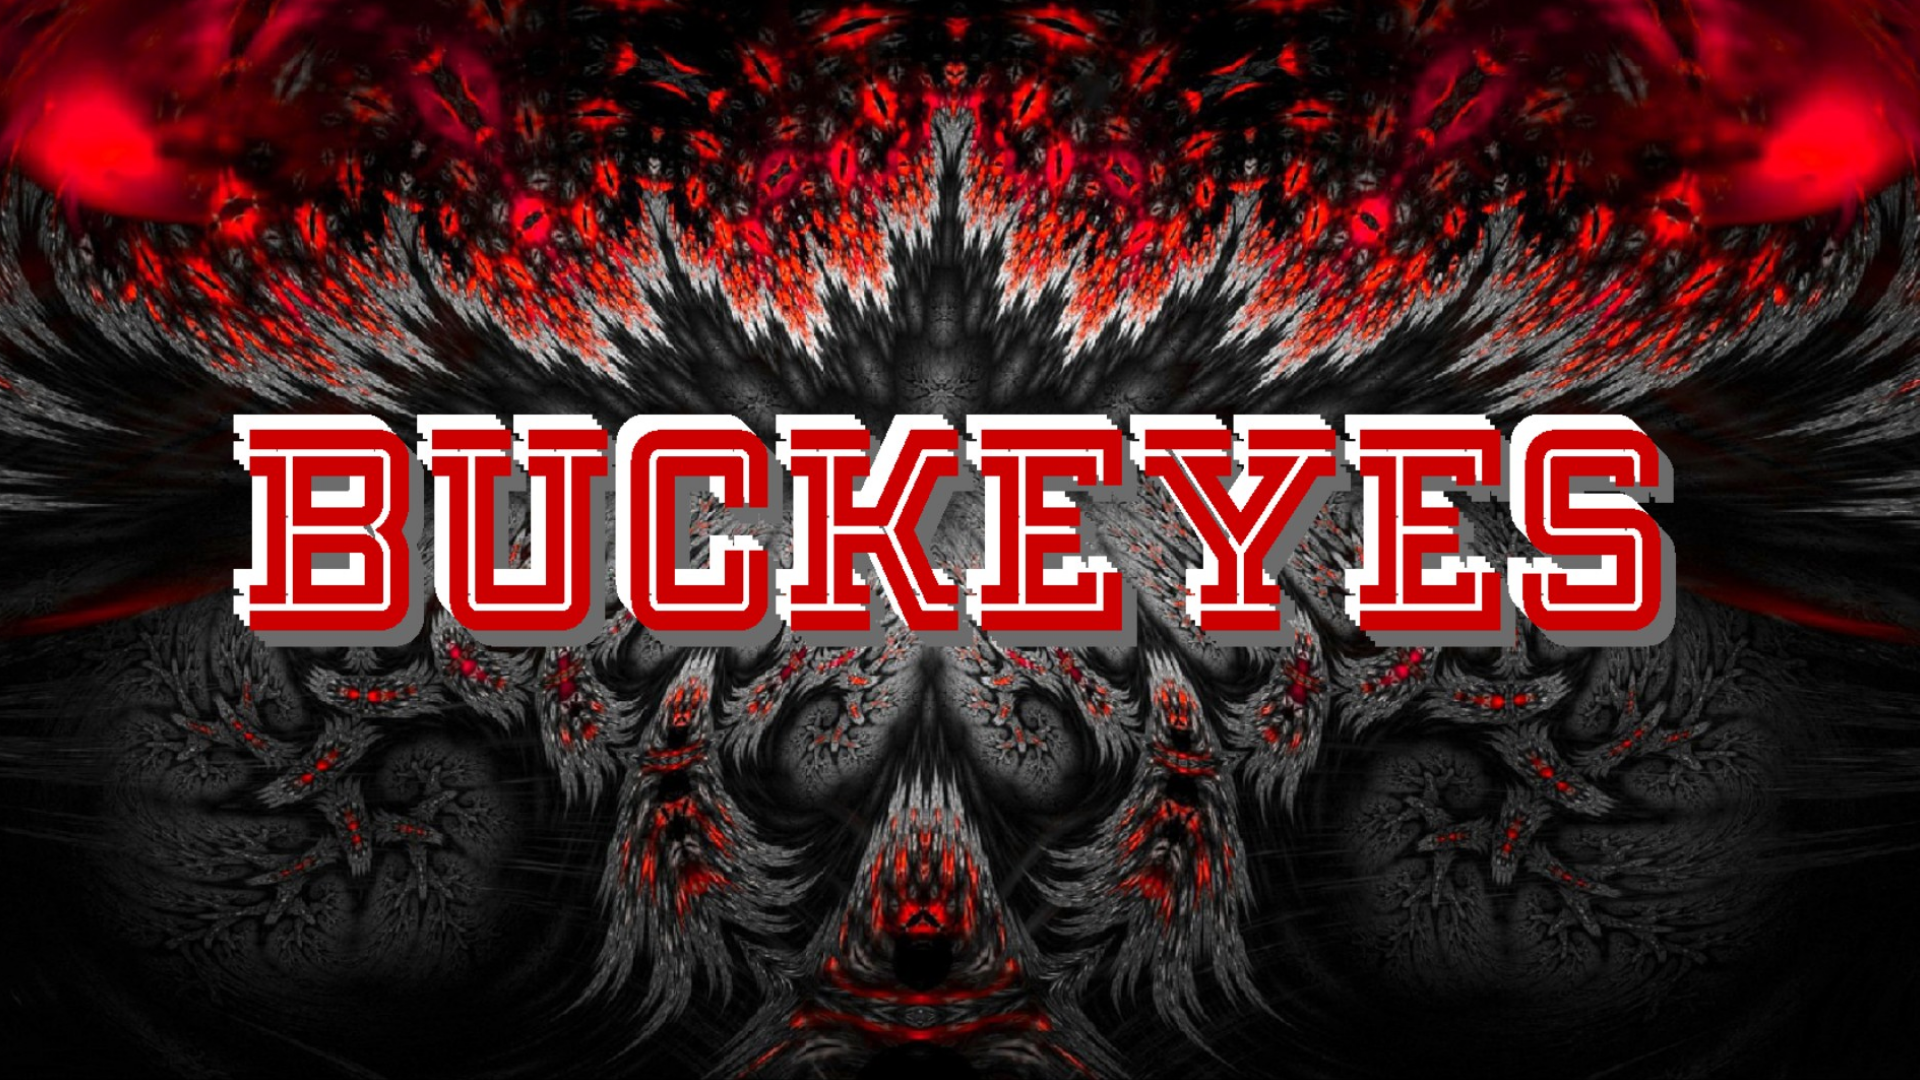 BUCKEYES ON AN ABSTRACT - Ohio State Buckeyes Wallpaper (30548079) - Fanpop